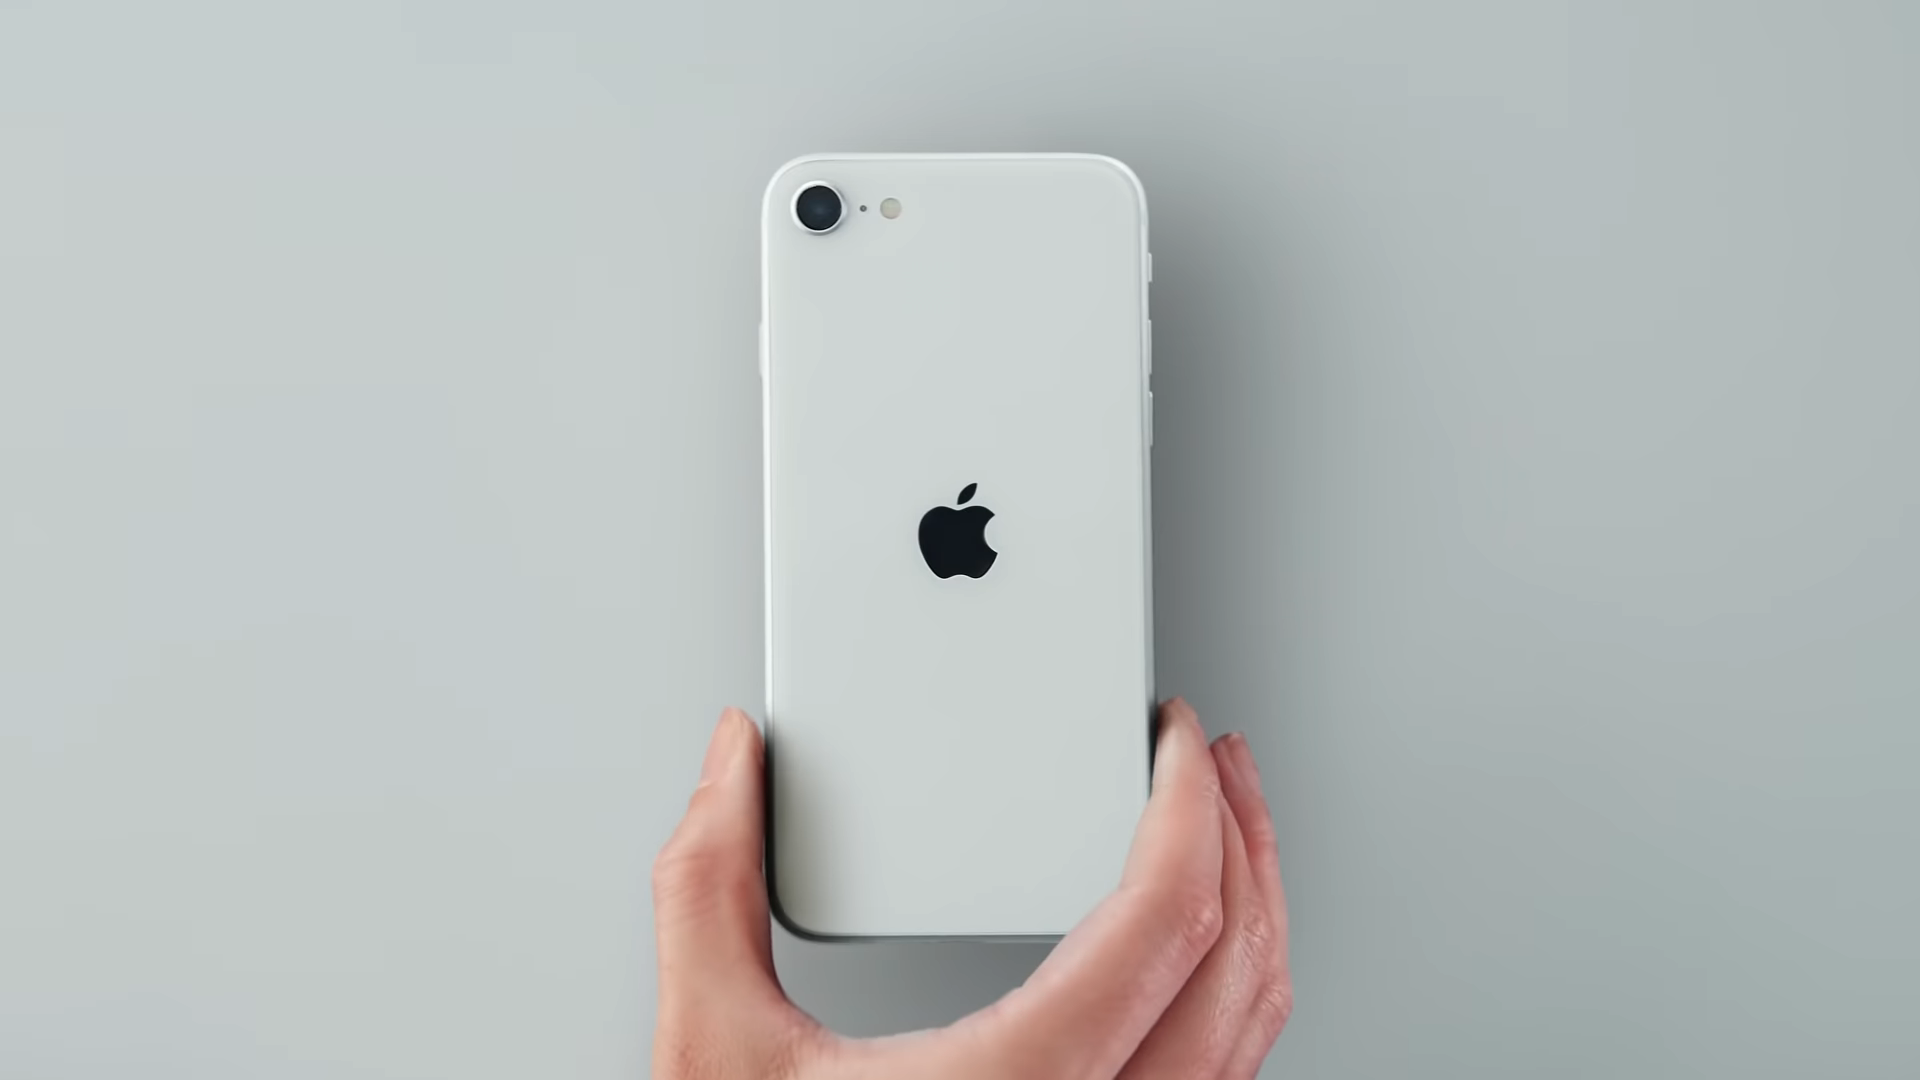 DXOMark chấm điểm camera iPhone SE 2020 cao ấn tượng